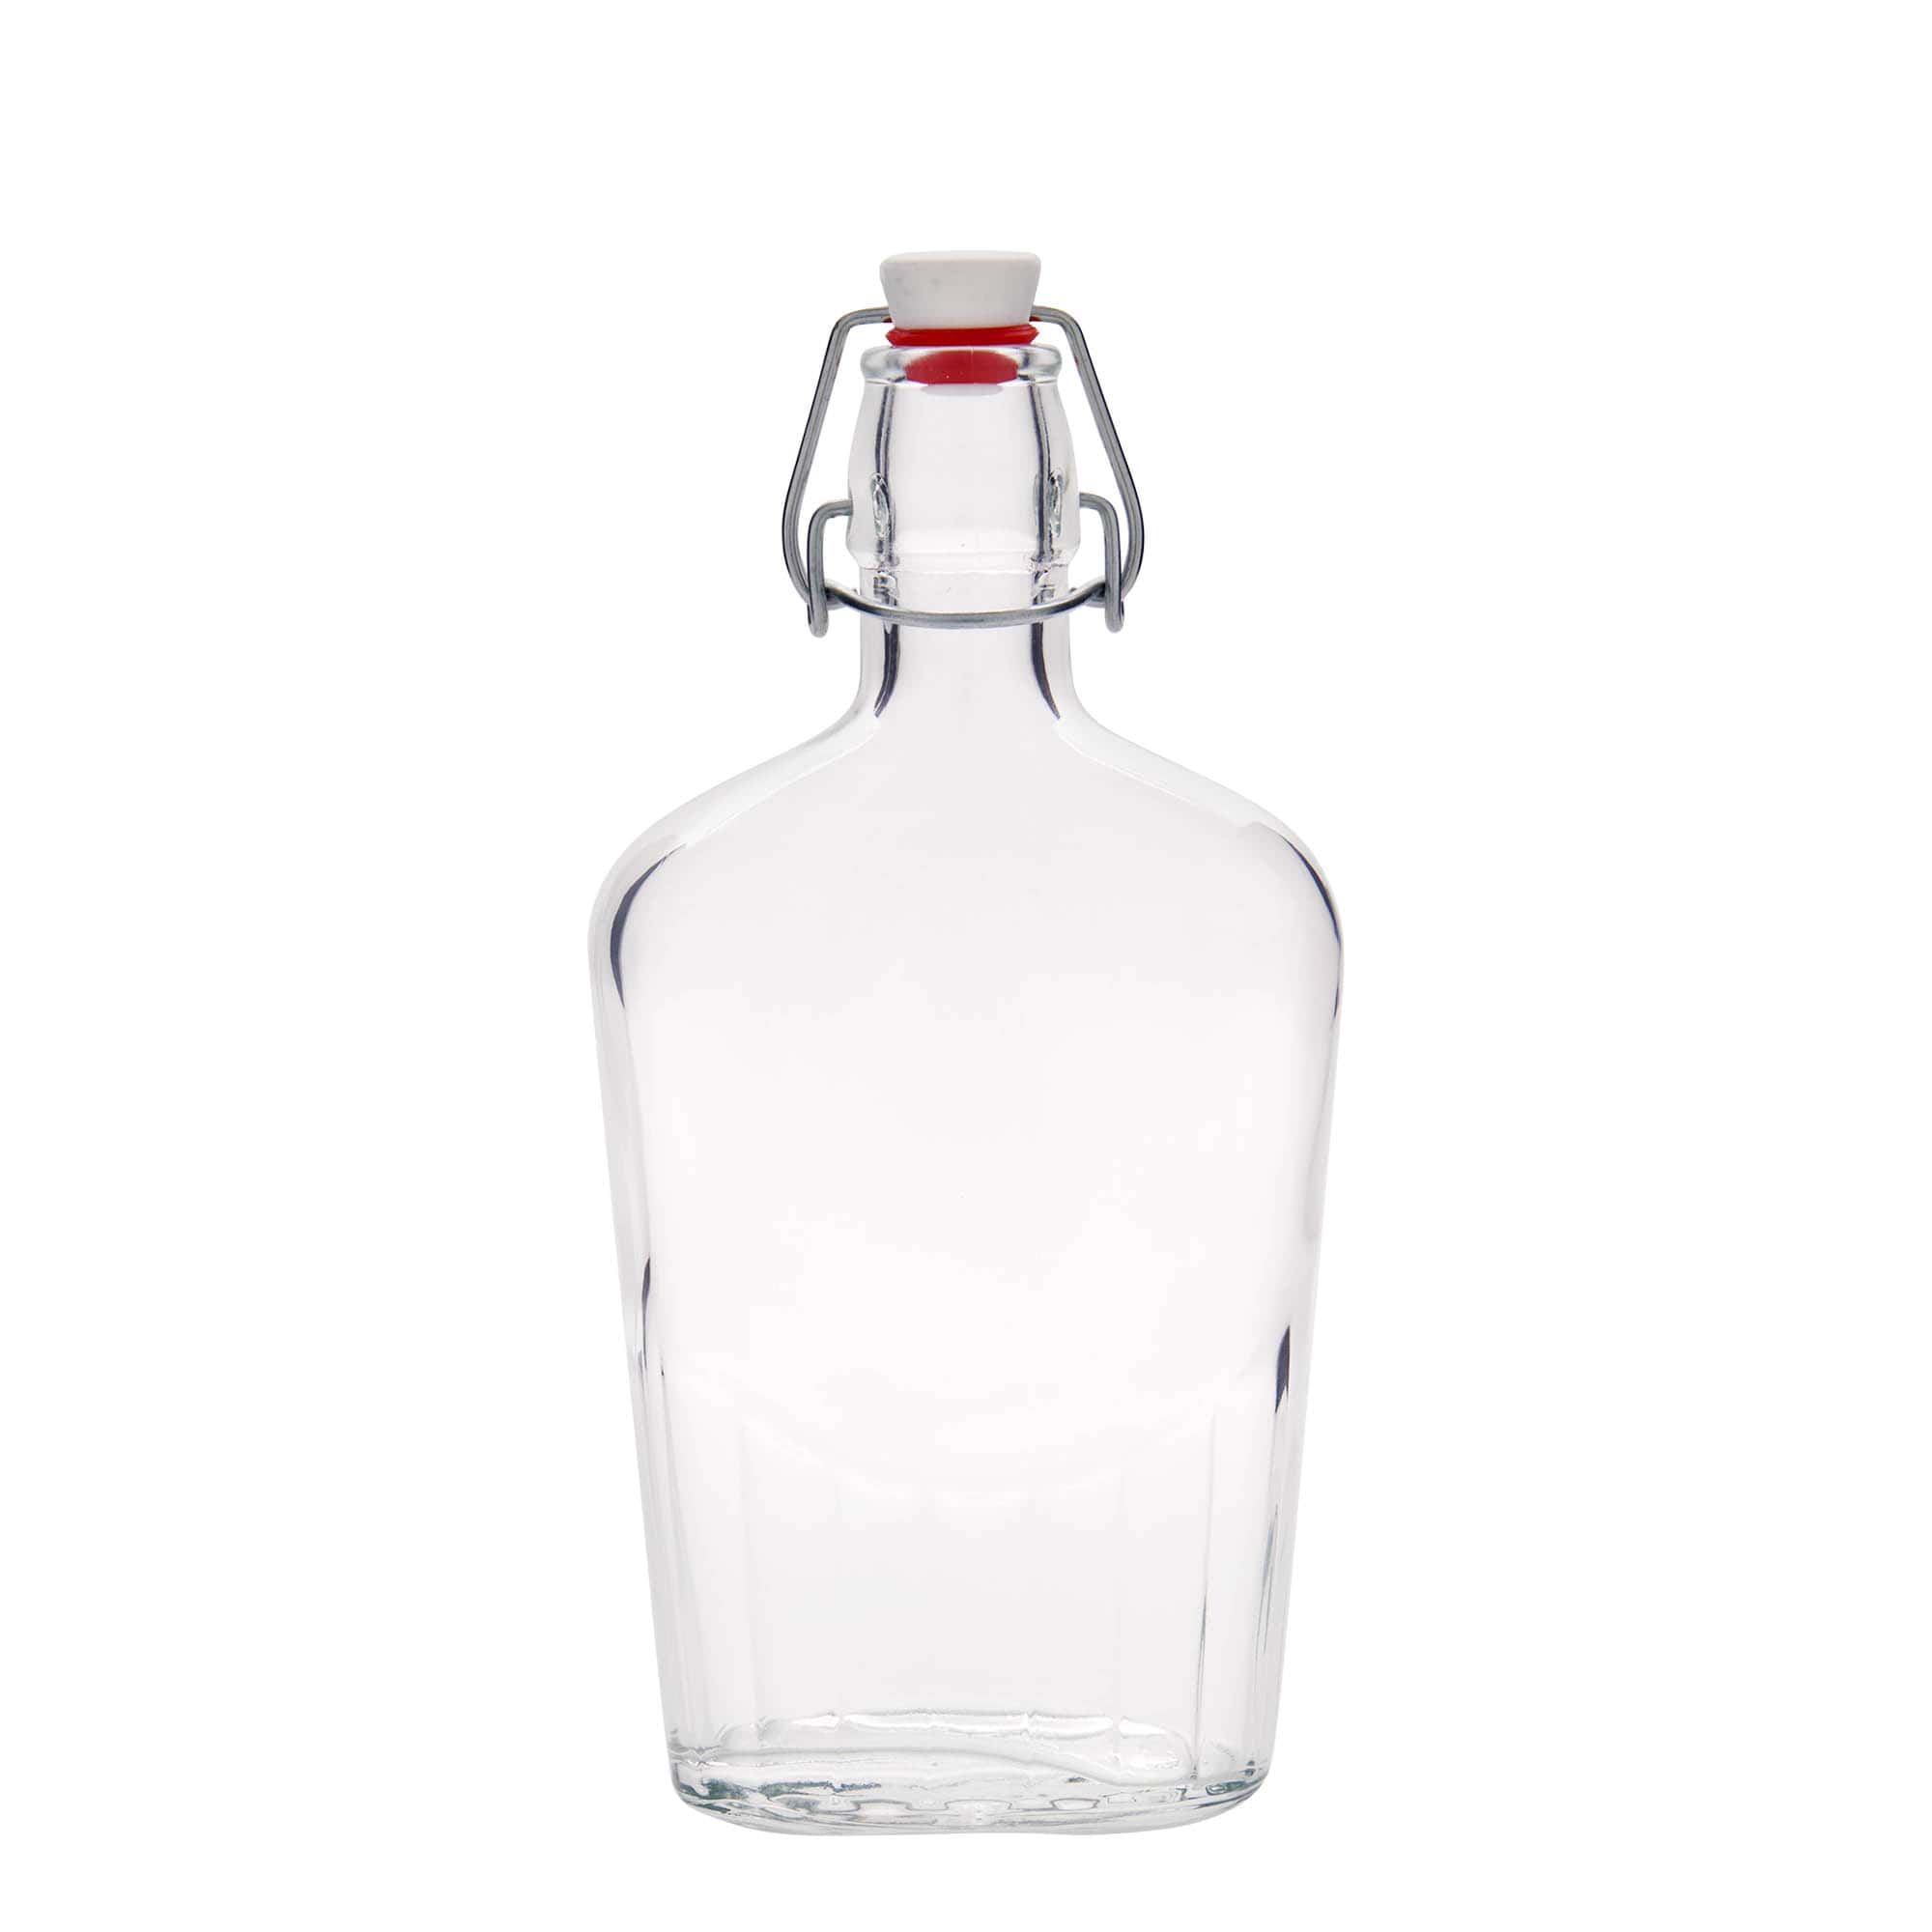 500 ml glass bottle 'Fiaschetta', oval, closure: swing top